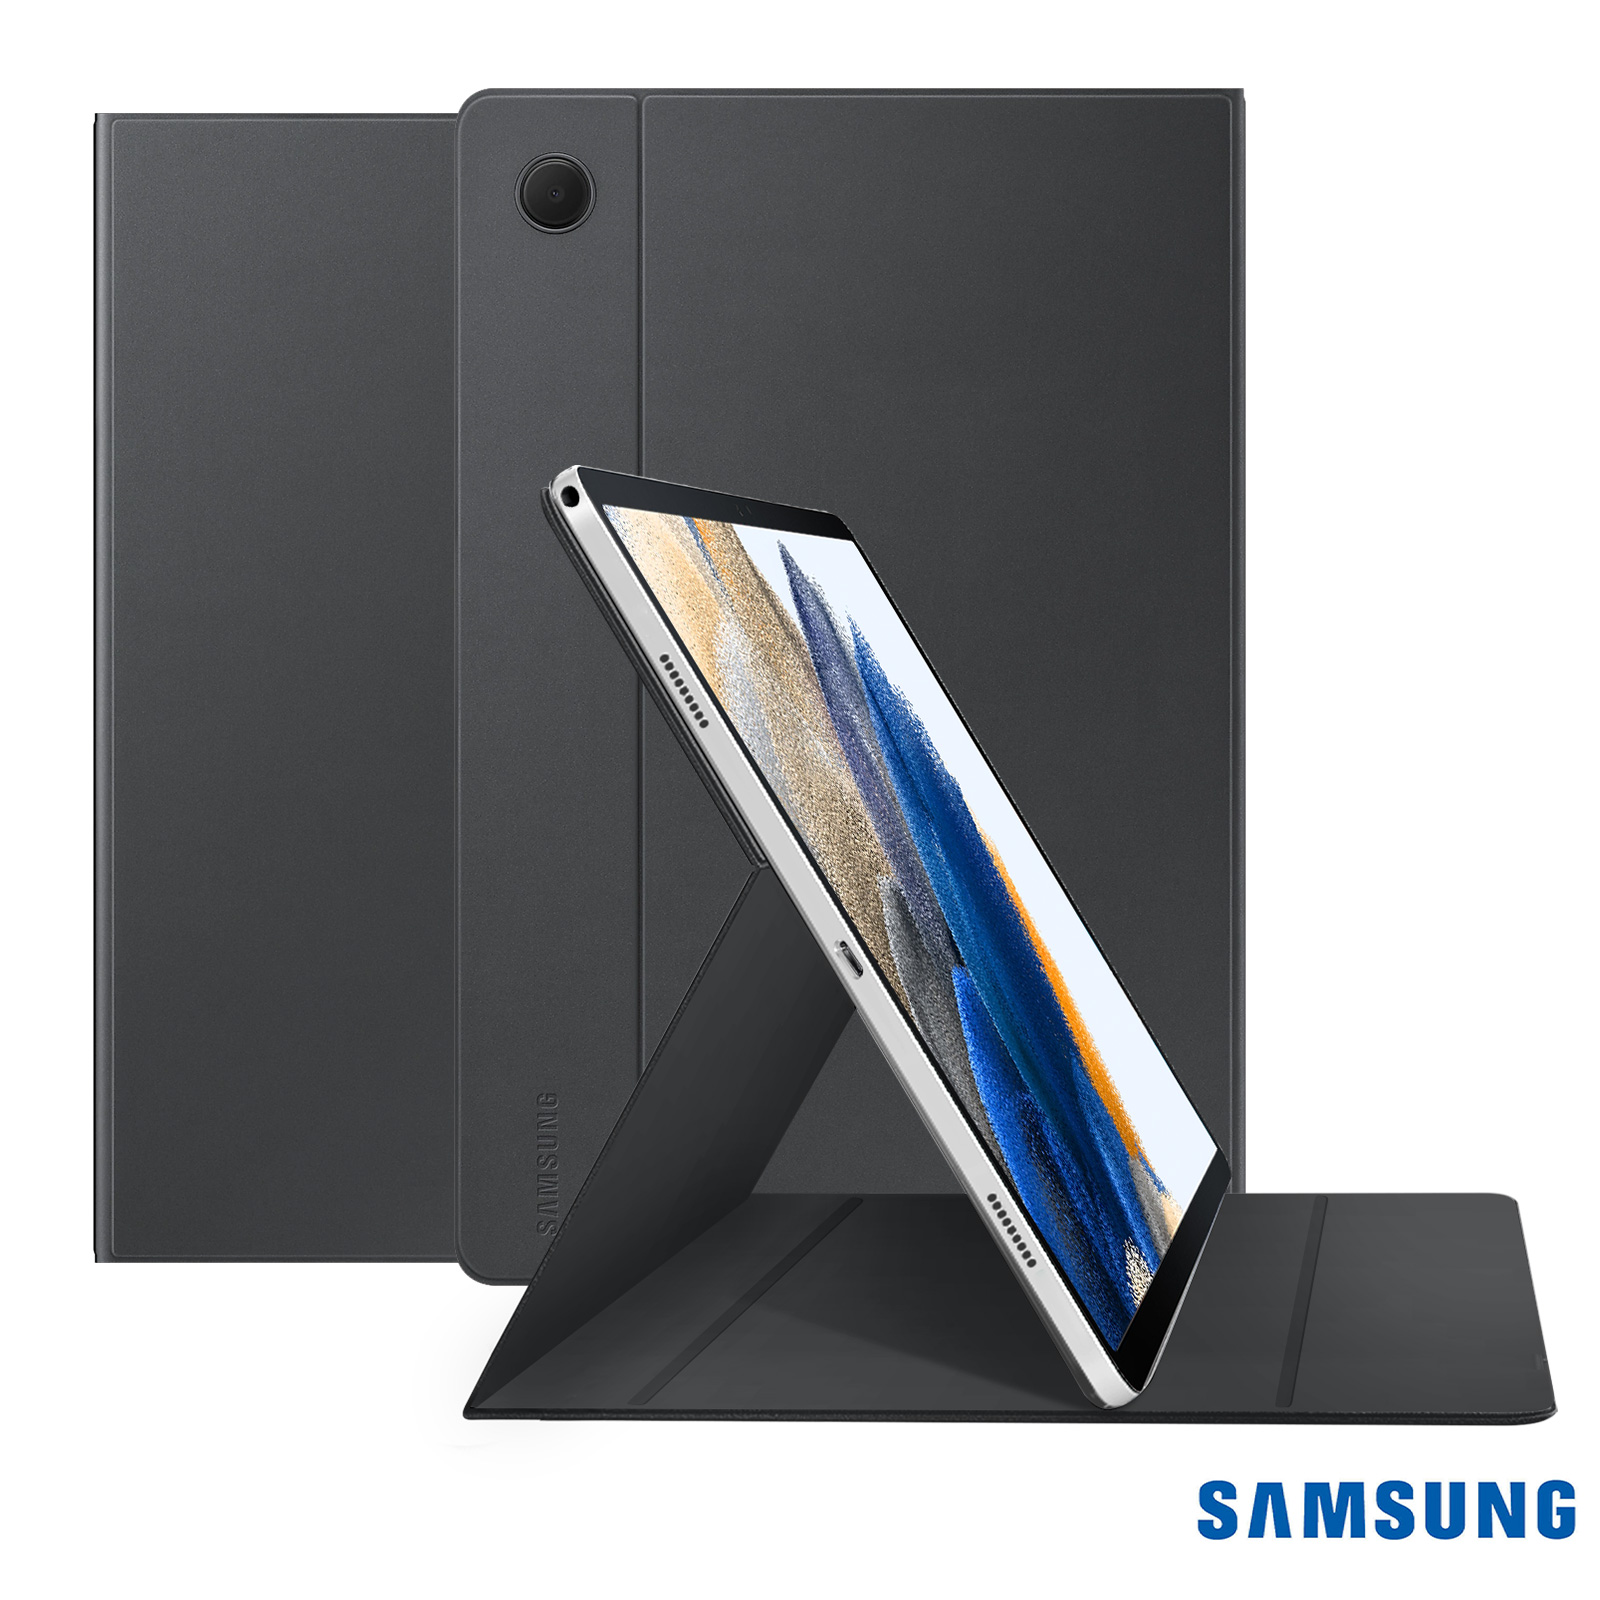 Housse Etui Tablette Samsung Galaxy Tab A 8.0 2019 Case Book Case - Rose  Foncé